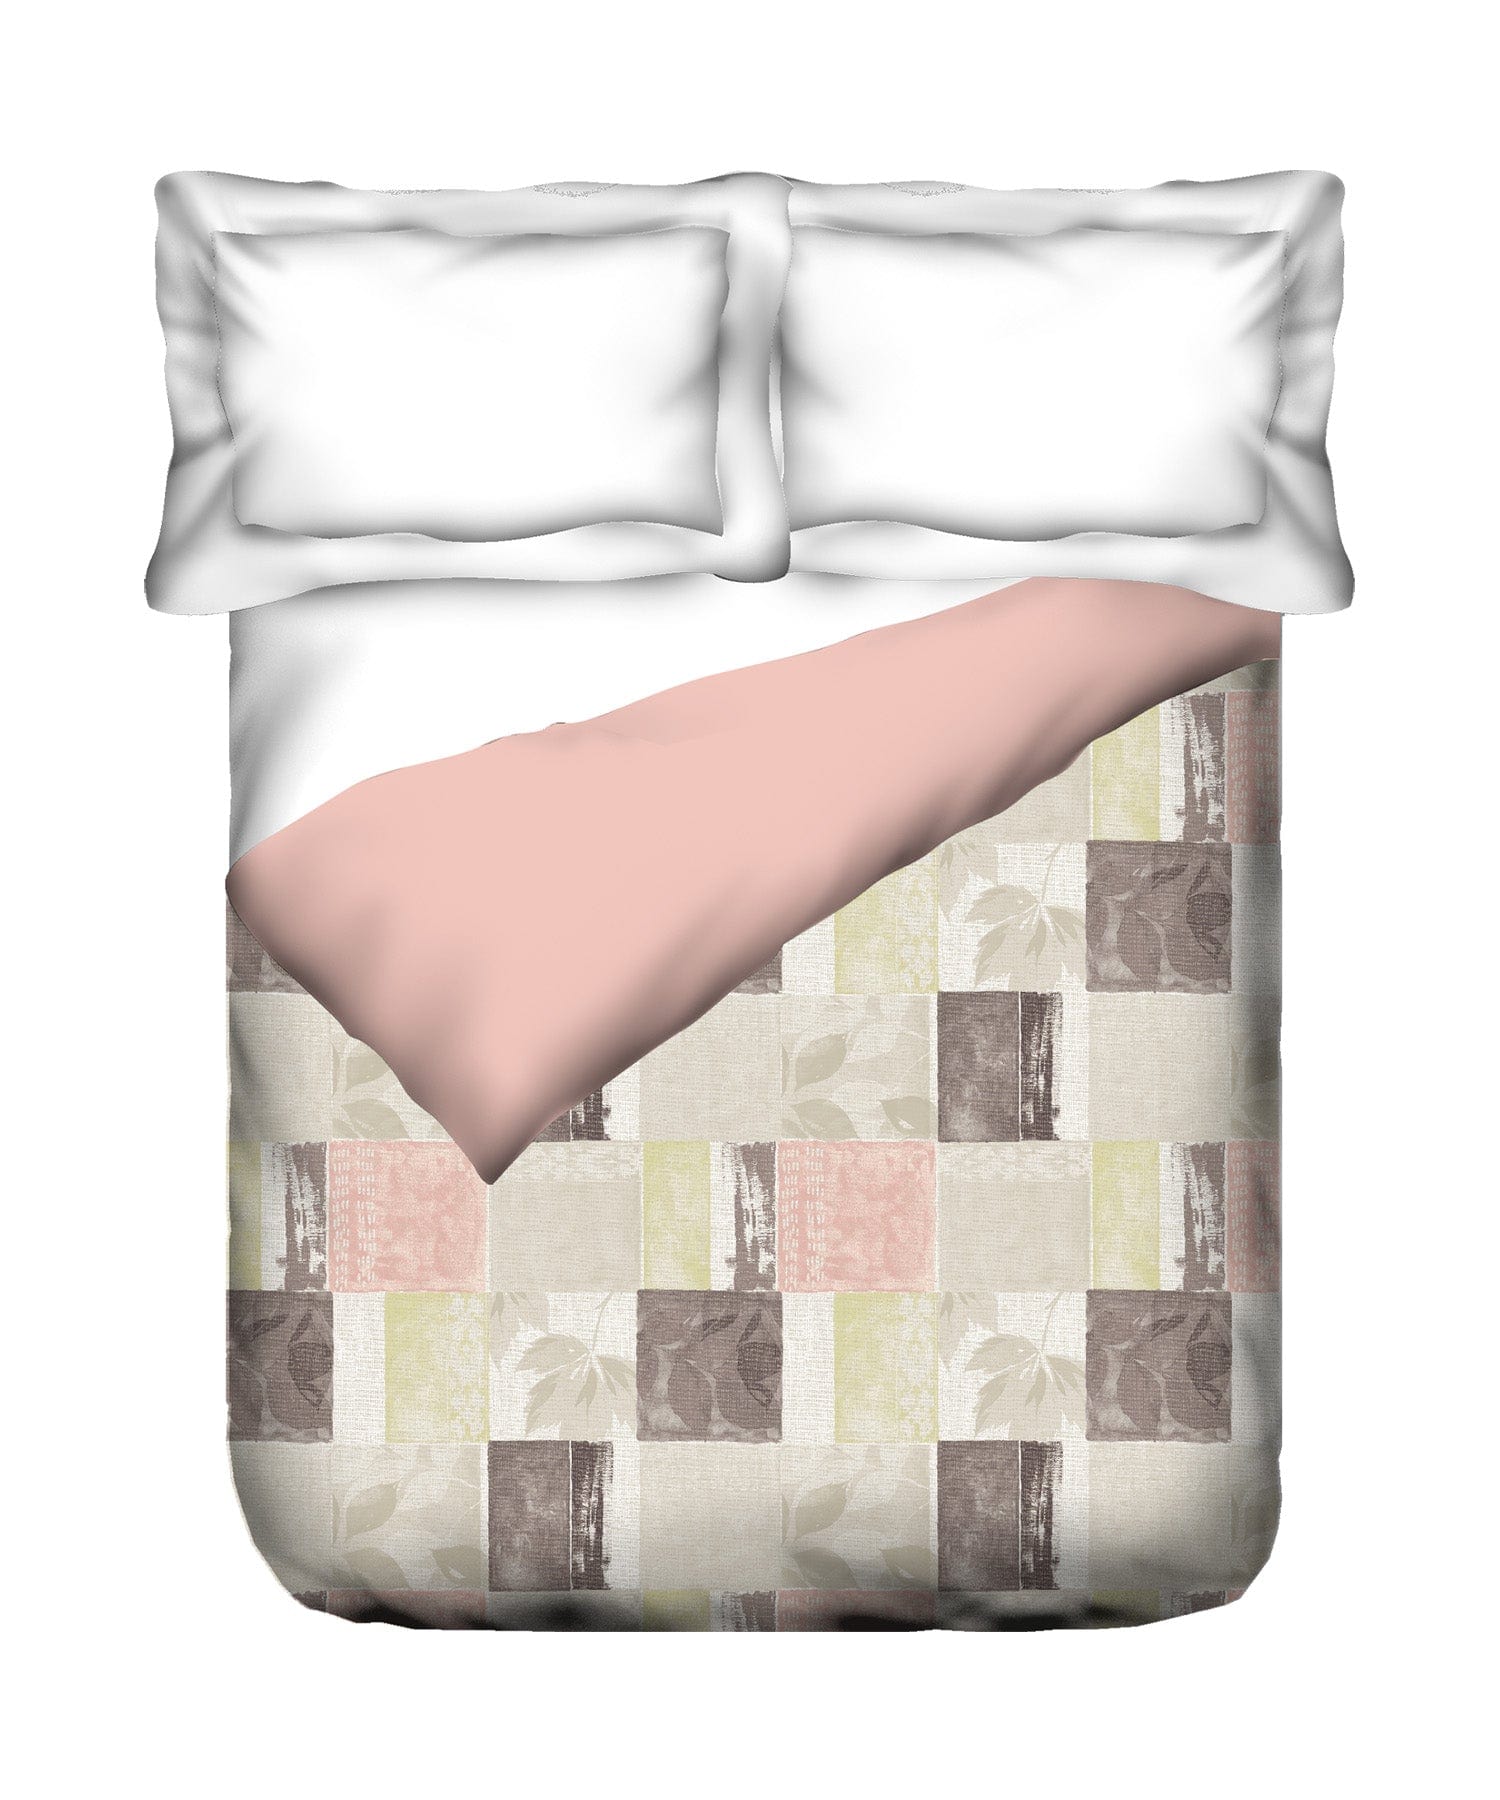 Double Comforter ₹6399/-